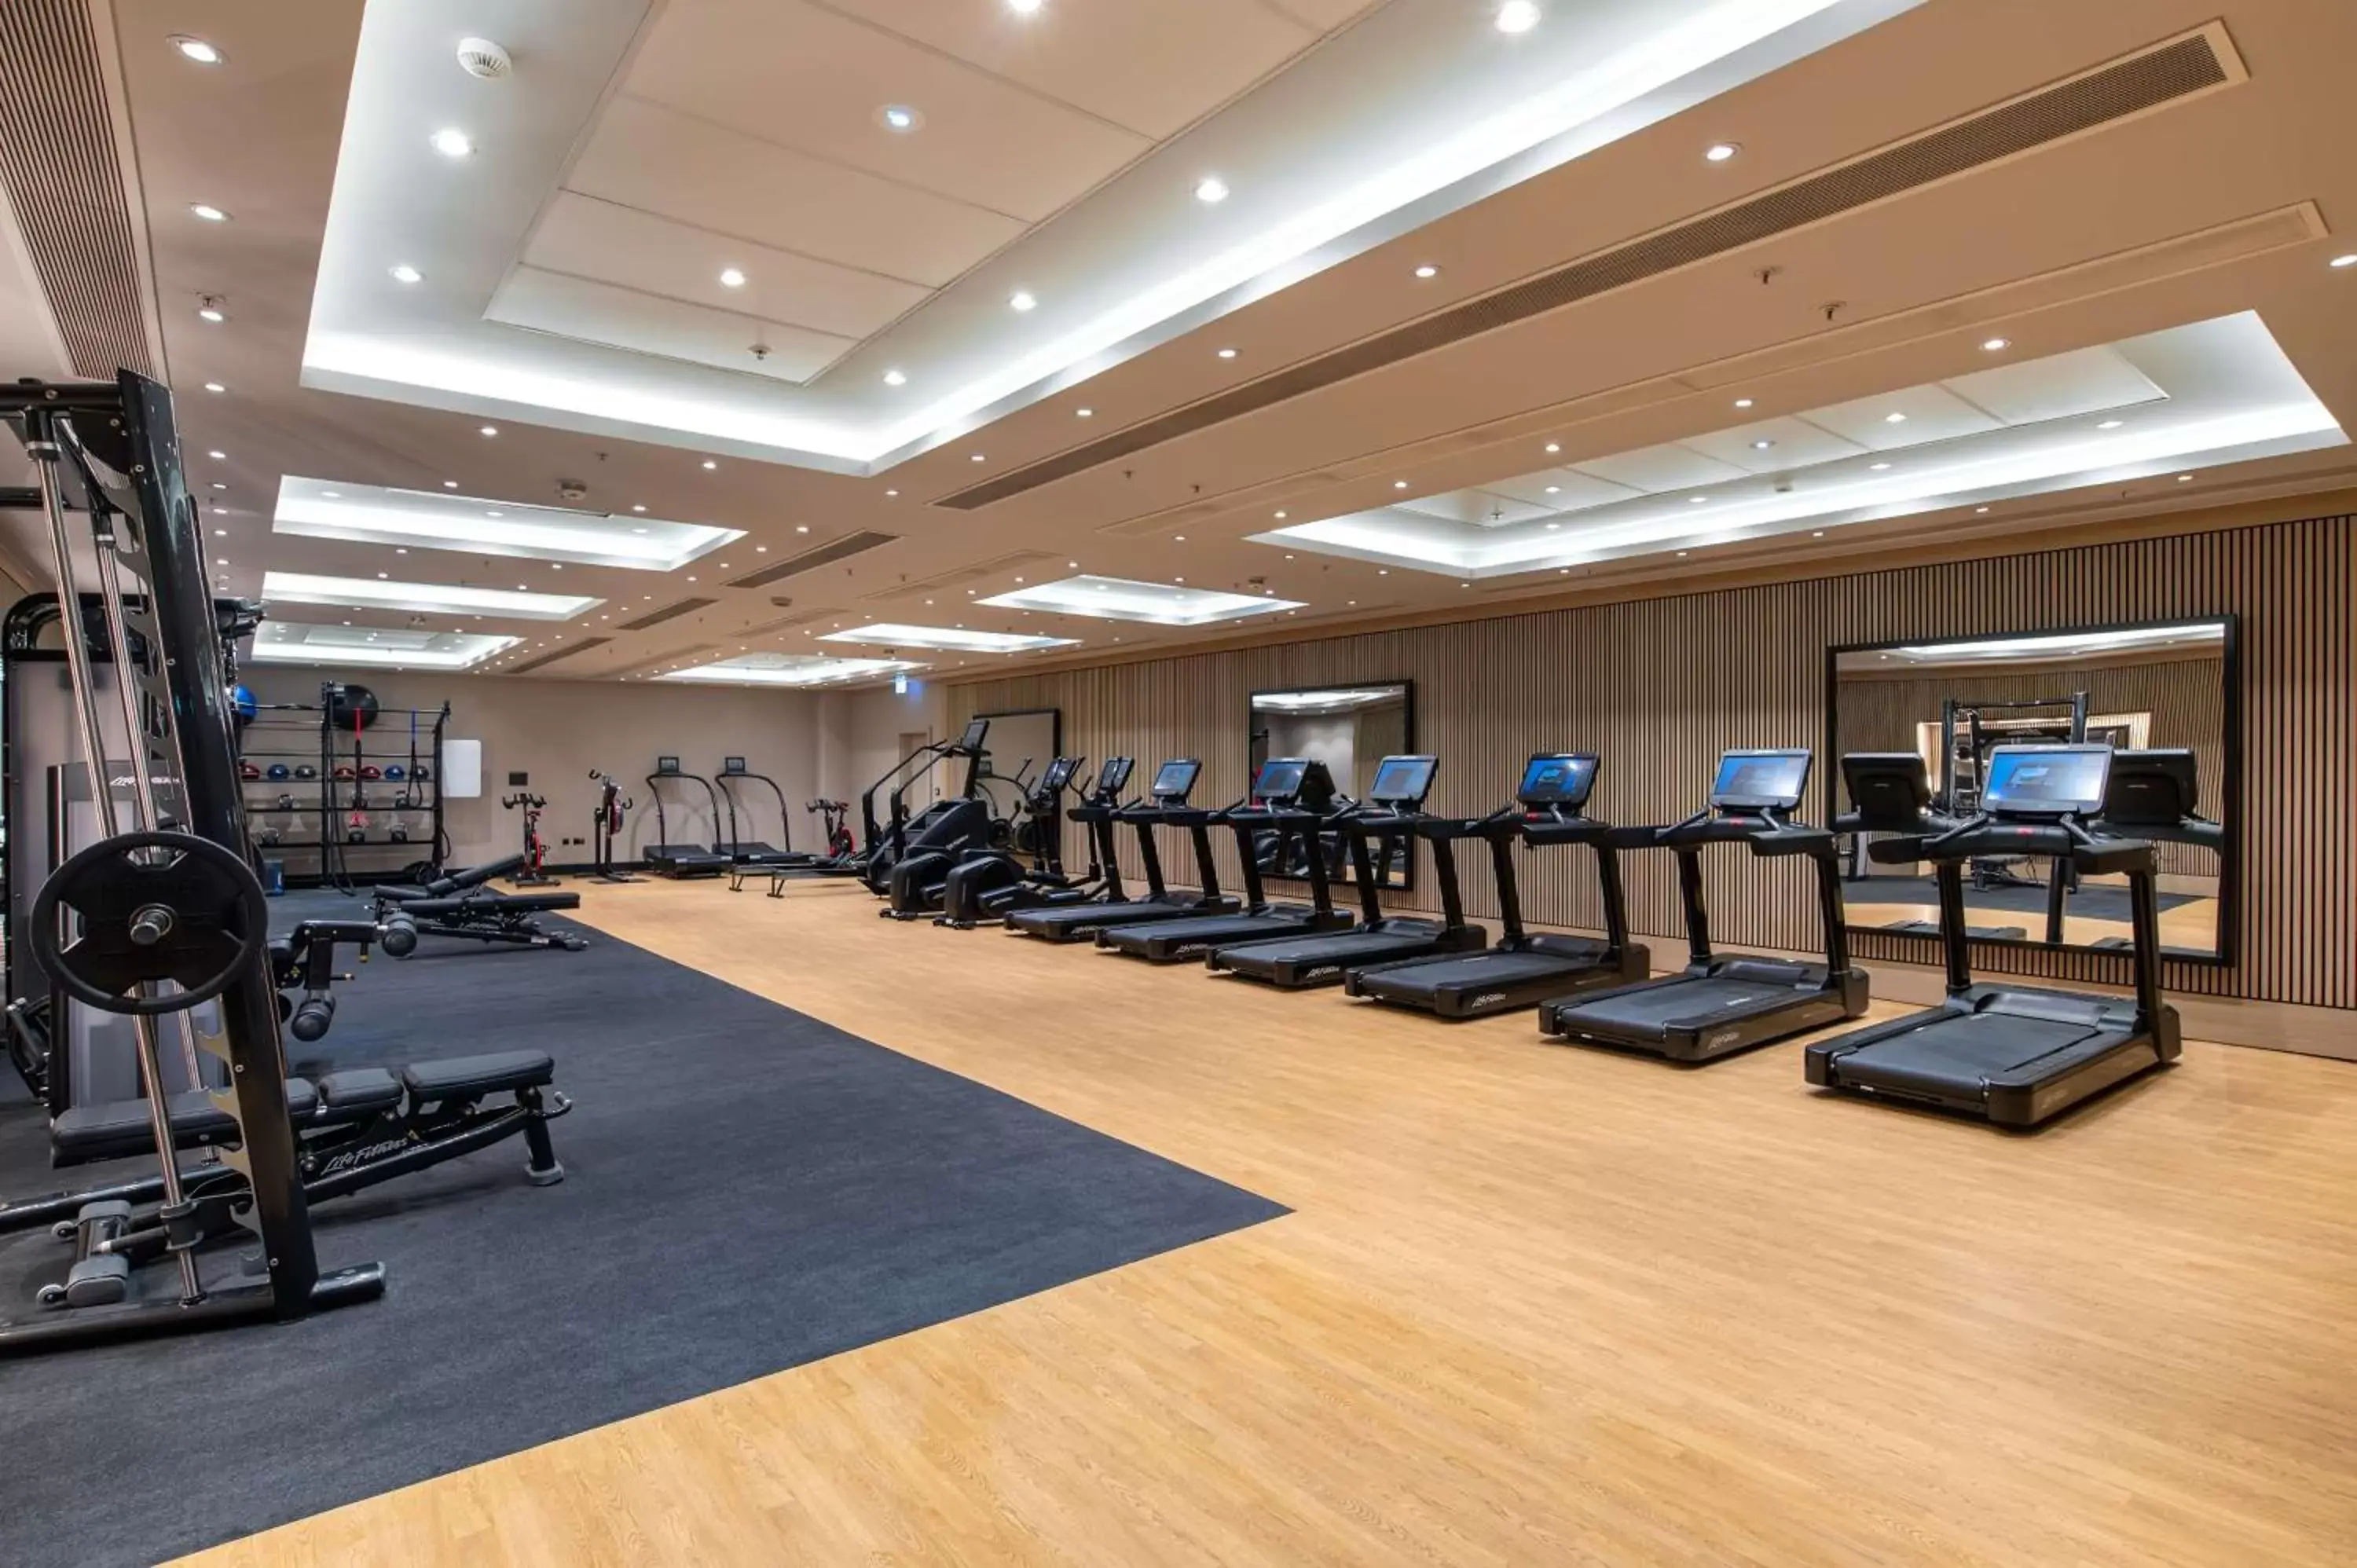 Fitness centre/facilities, Fitness Center/Facilities in Hilton London Metropole